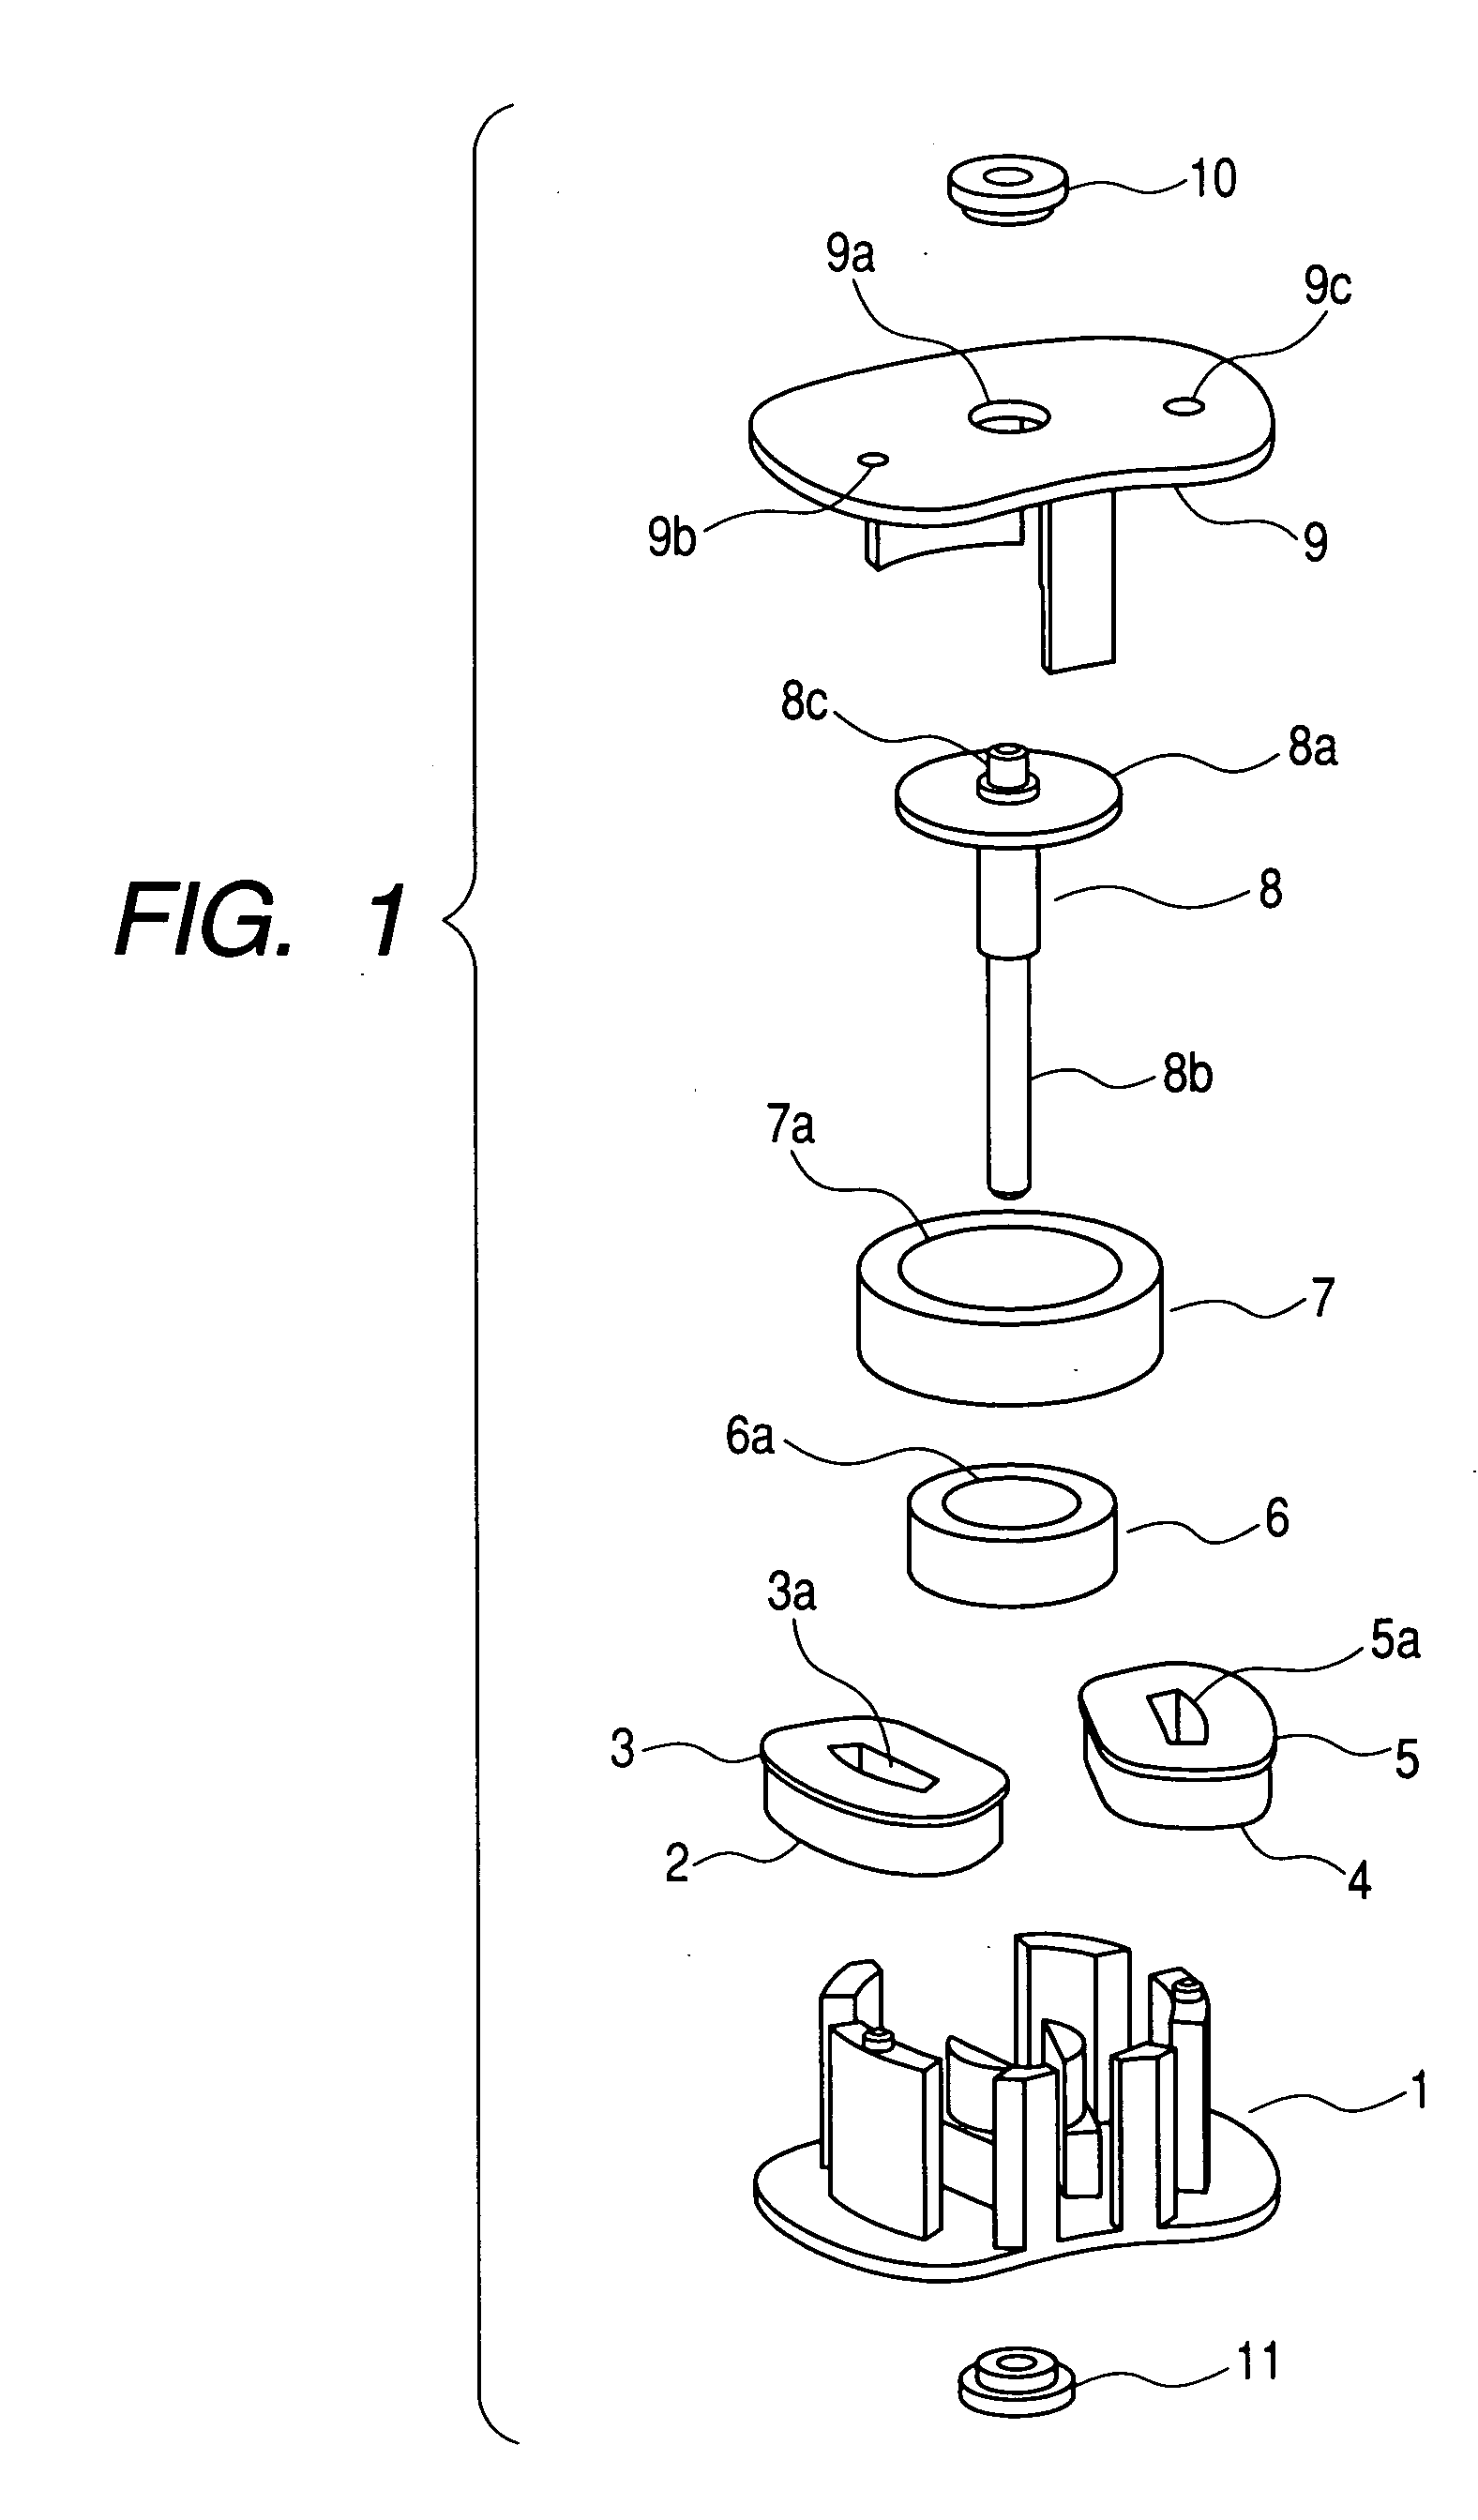 Motor and optical apparatus